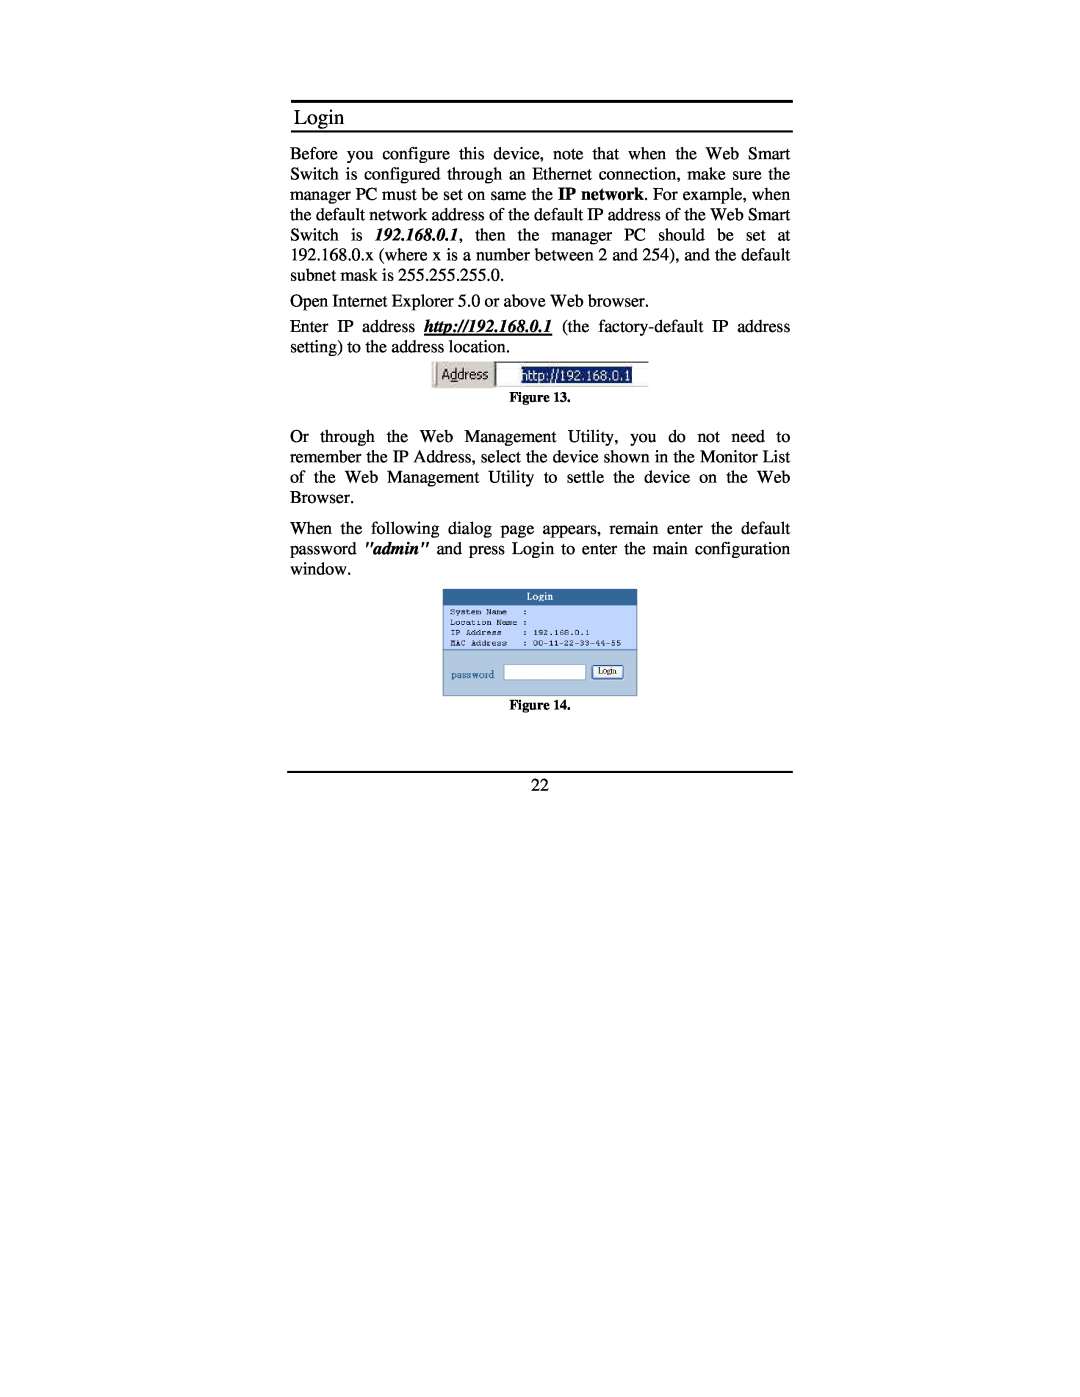 TRENDnet TEG-448WS manual Login 